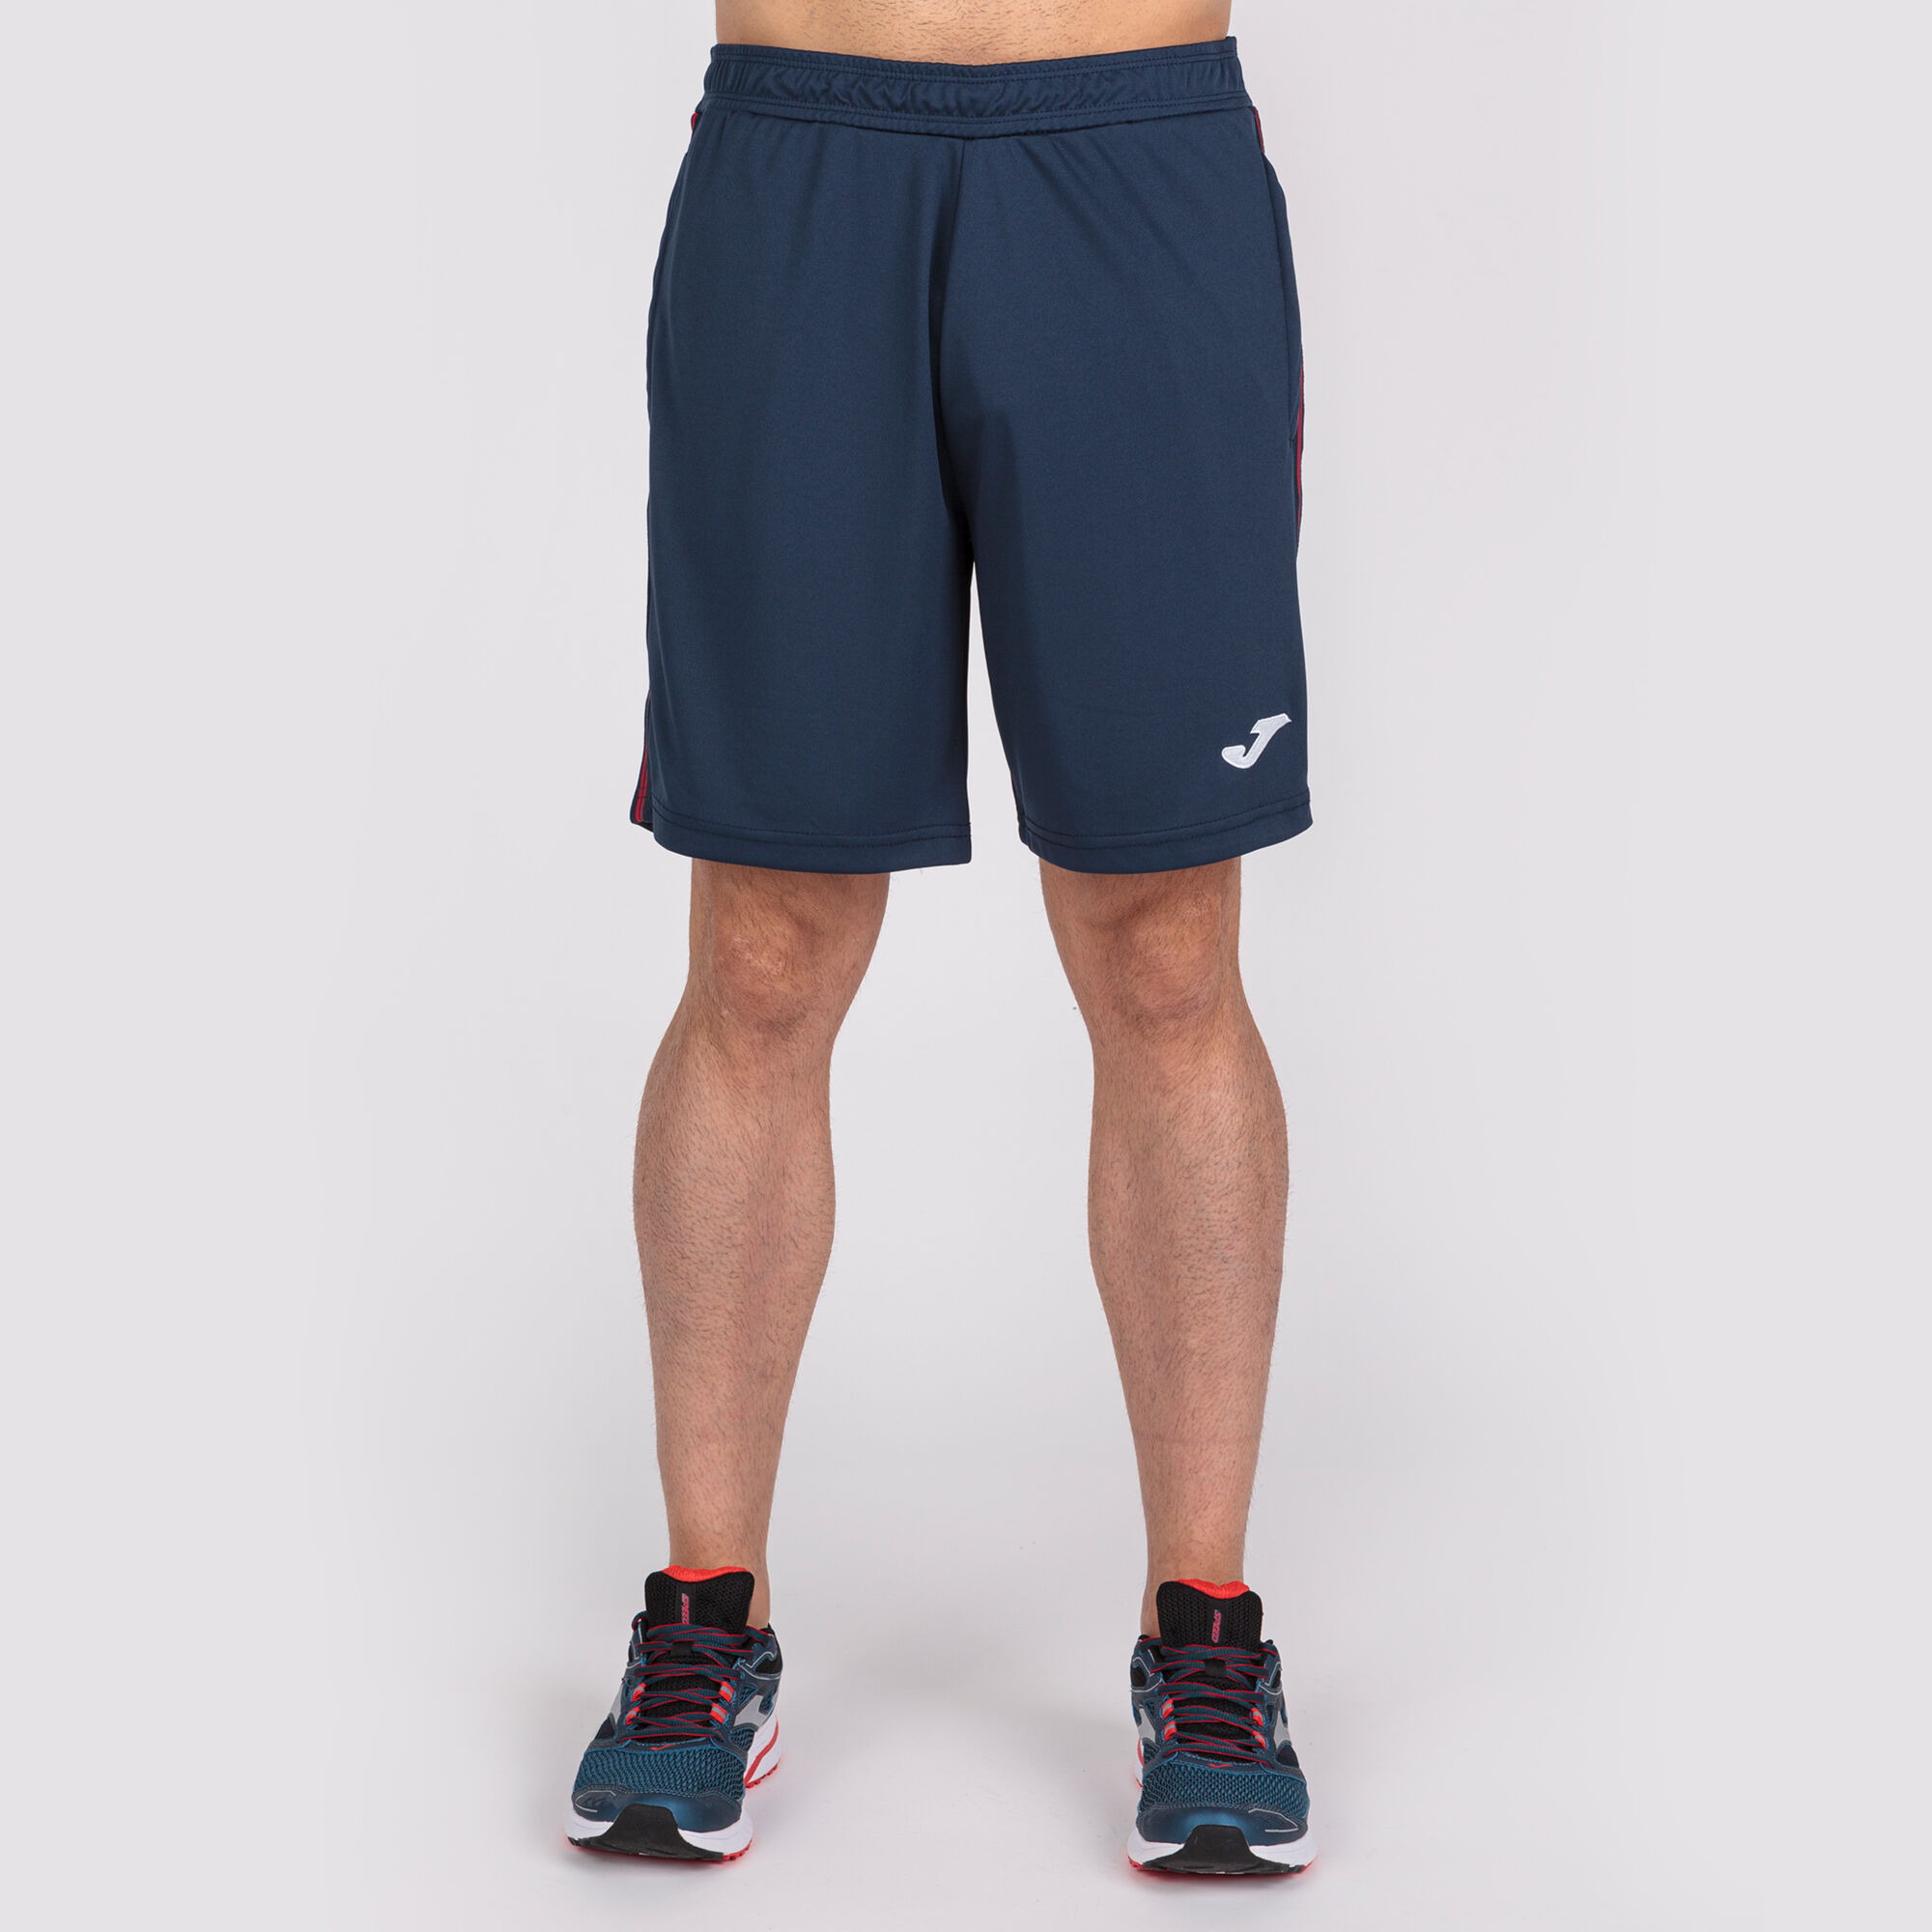 Bermuda shorts man Classic navy blue red